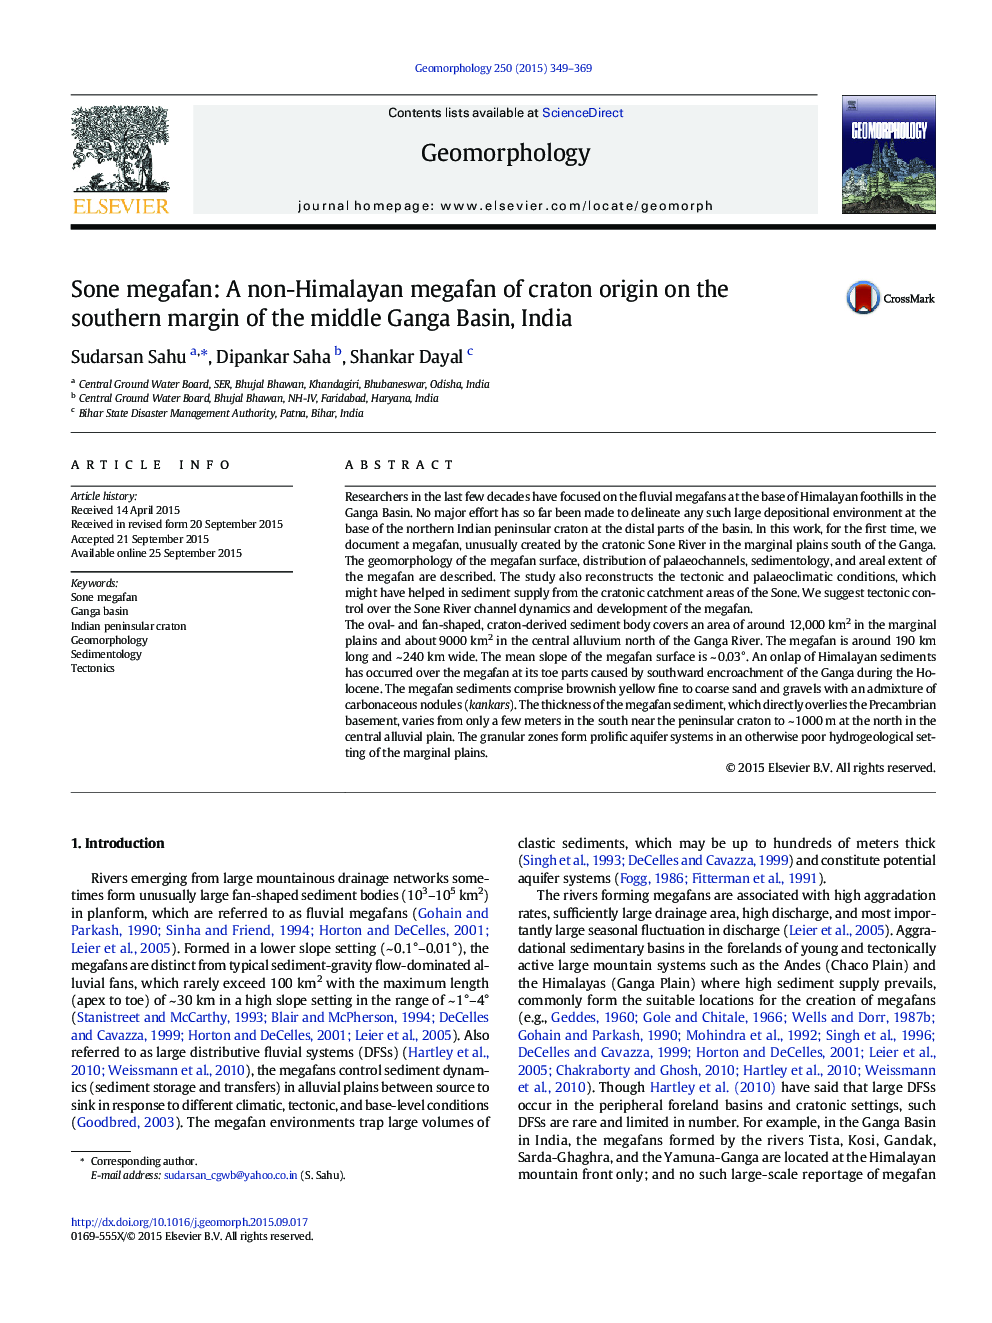 Sone megafan: A non-Himalayan megafan of craton origin on the southern margin of the middle Ganga Basin, India